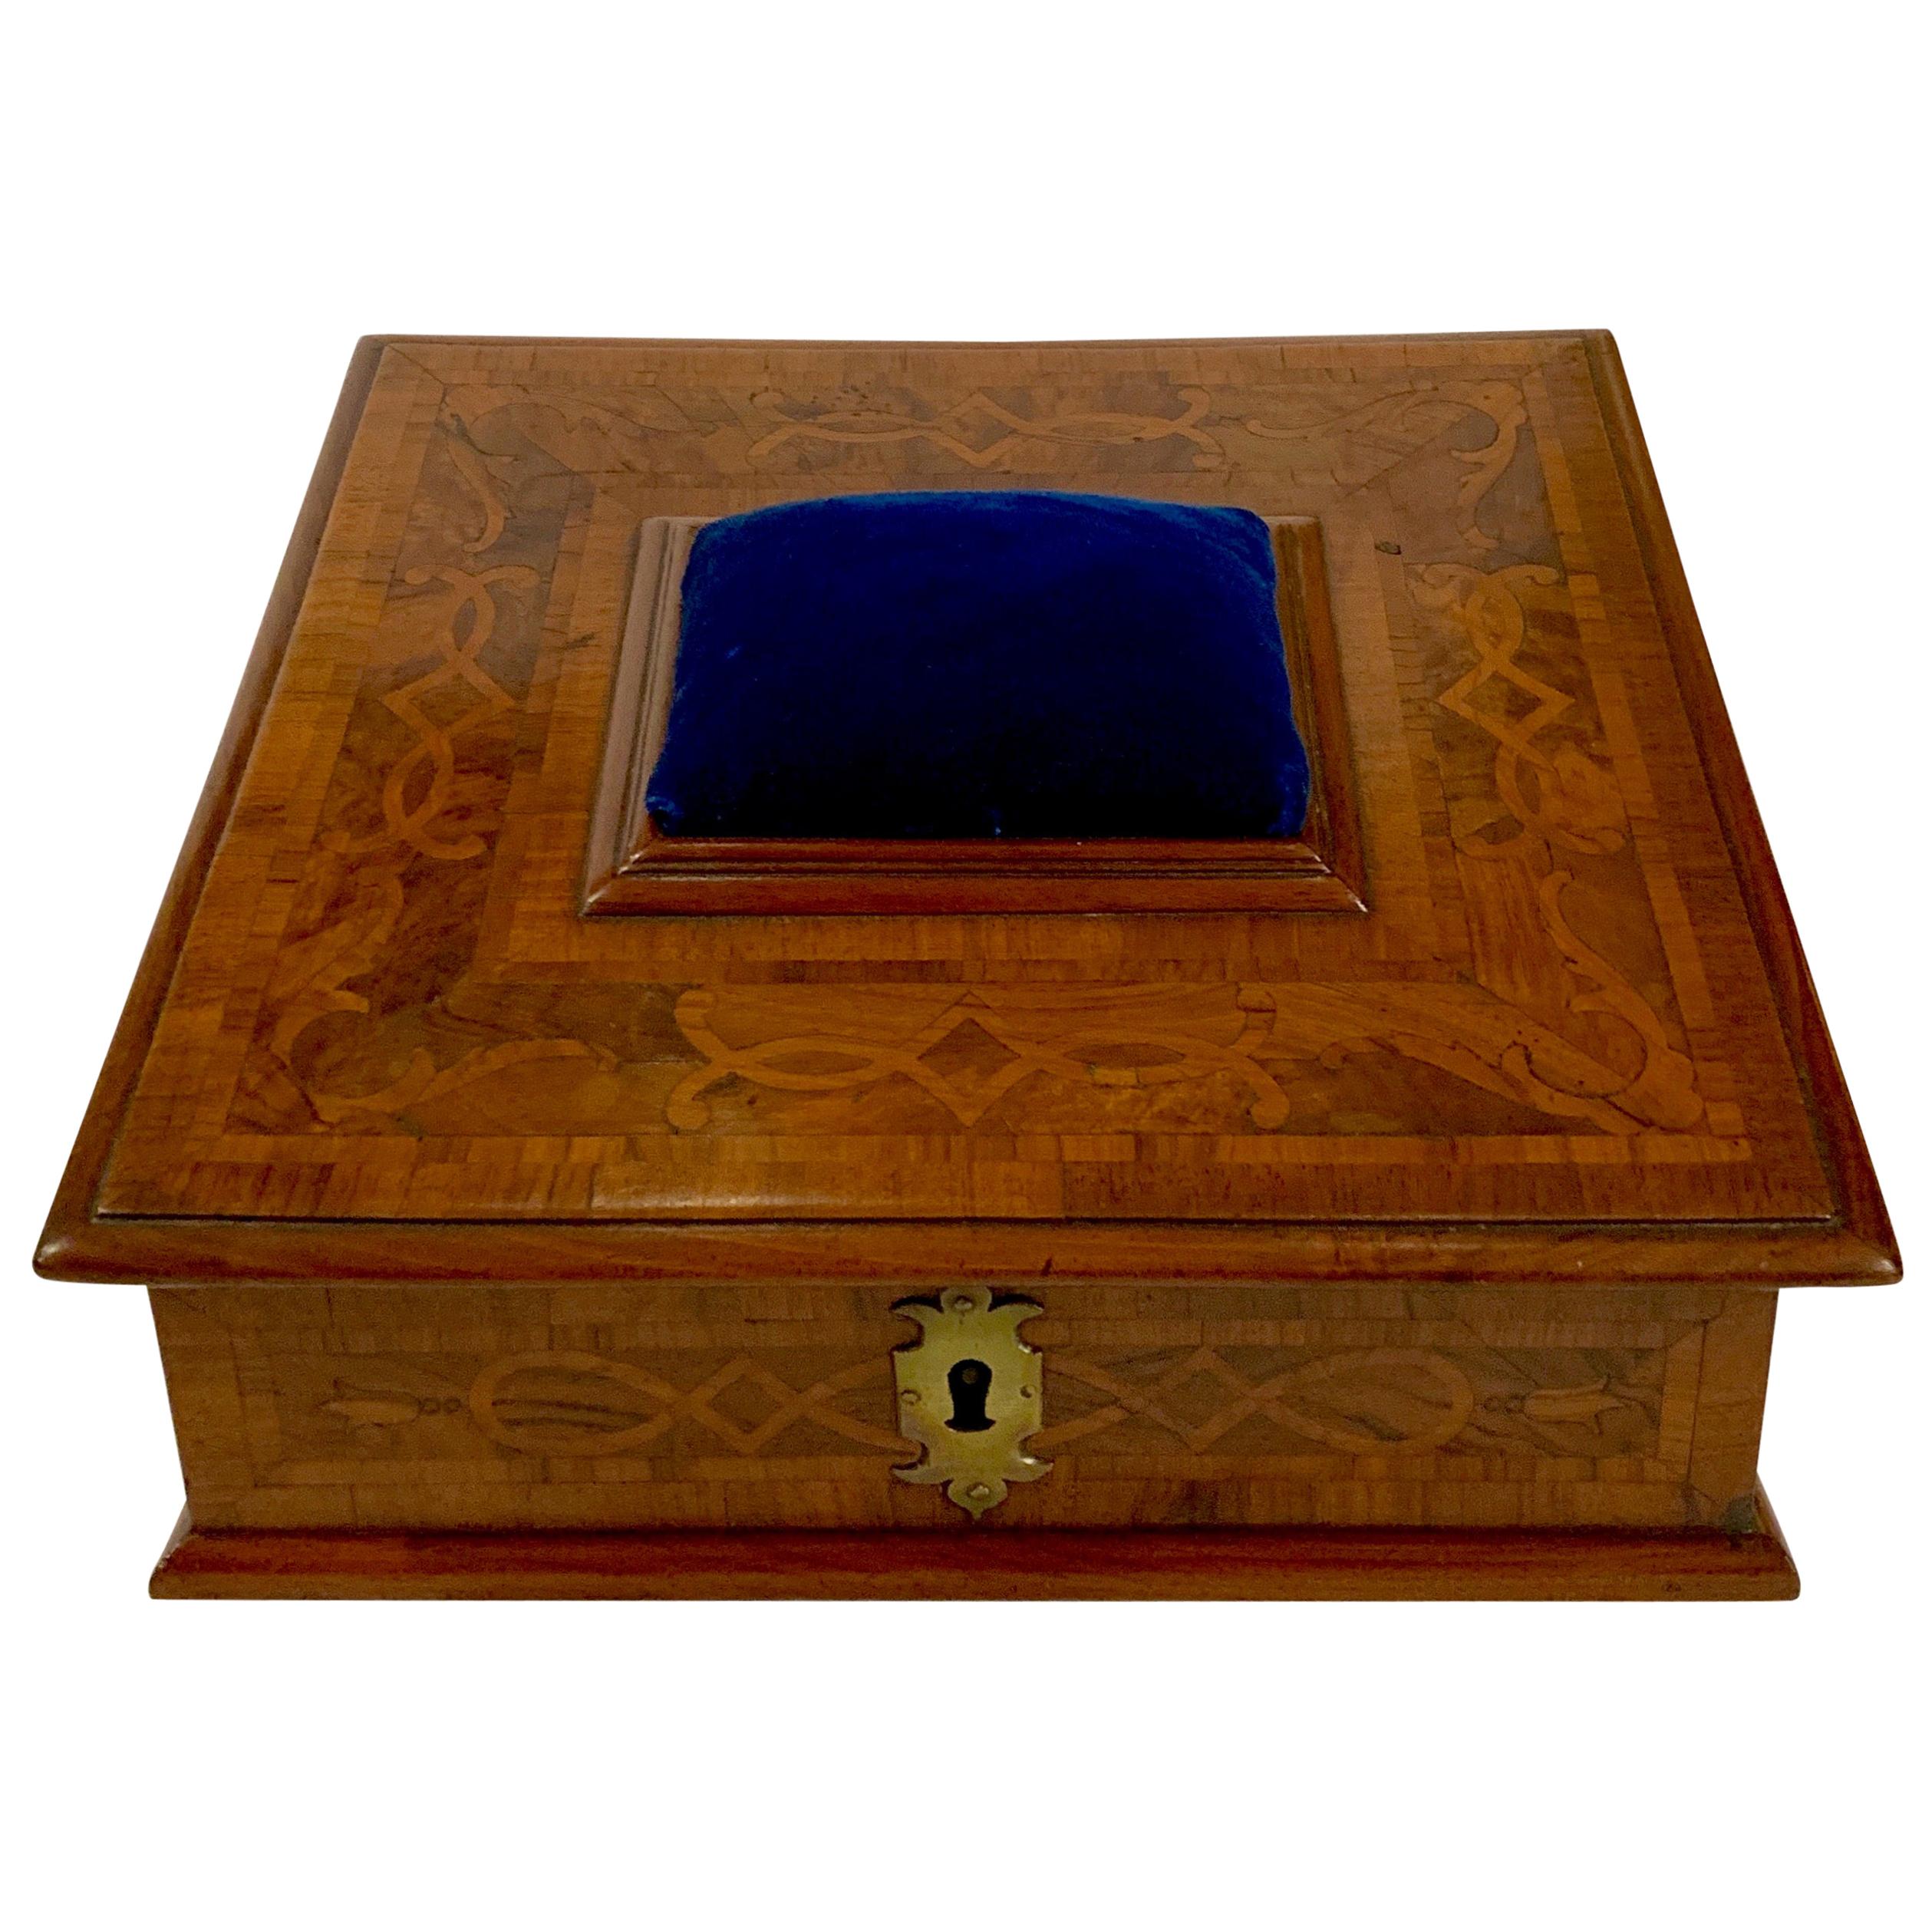 Antique English Sewing Box or Jewel Box, circa 1850-1860